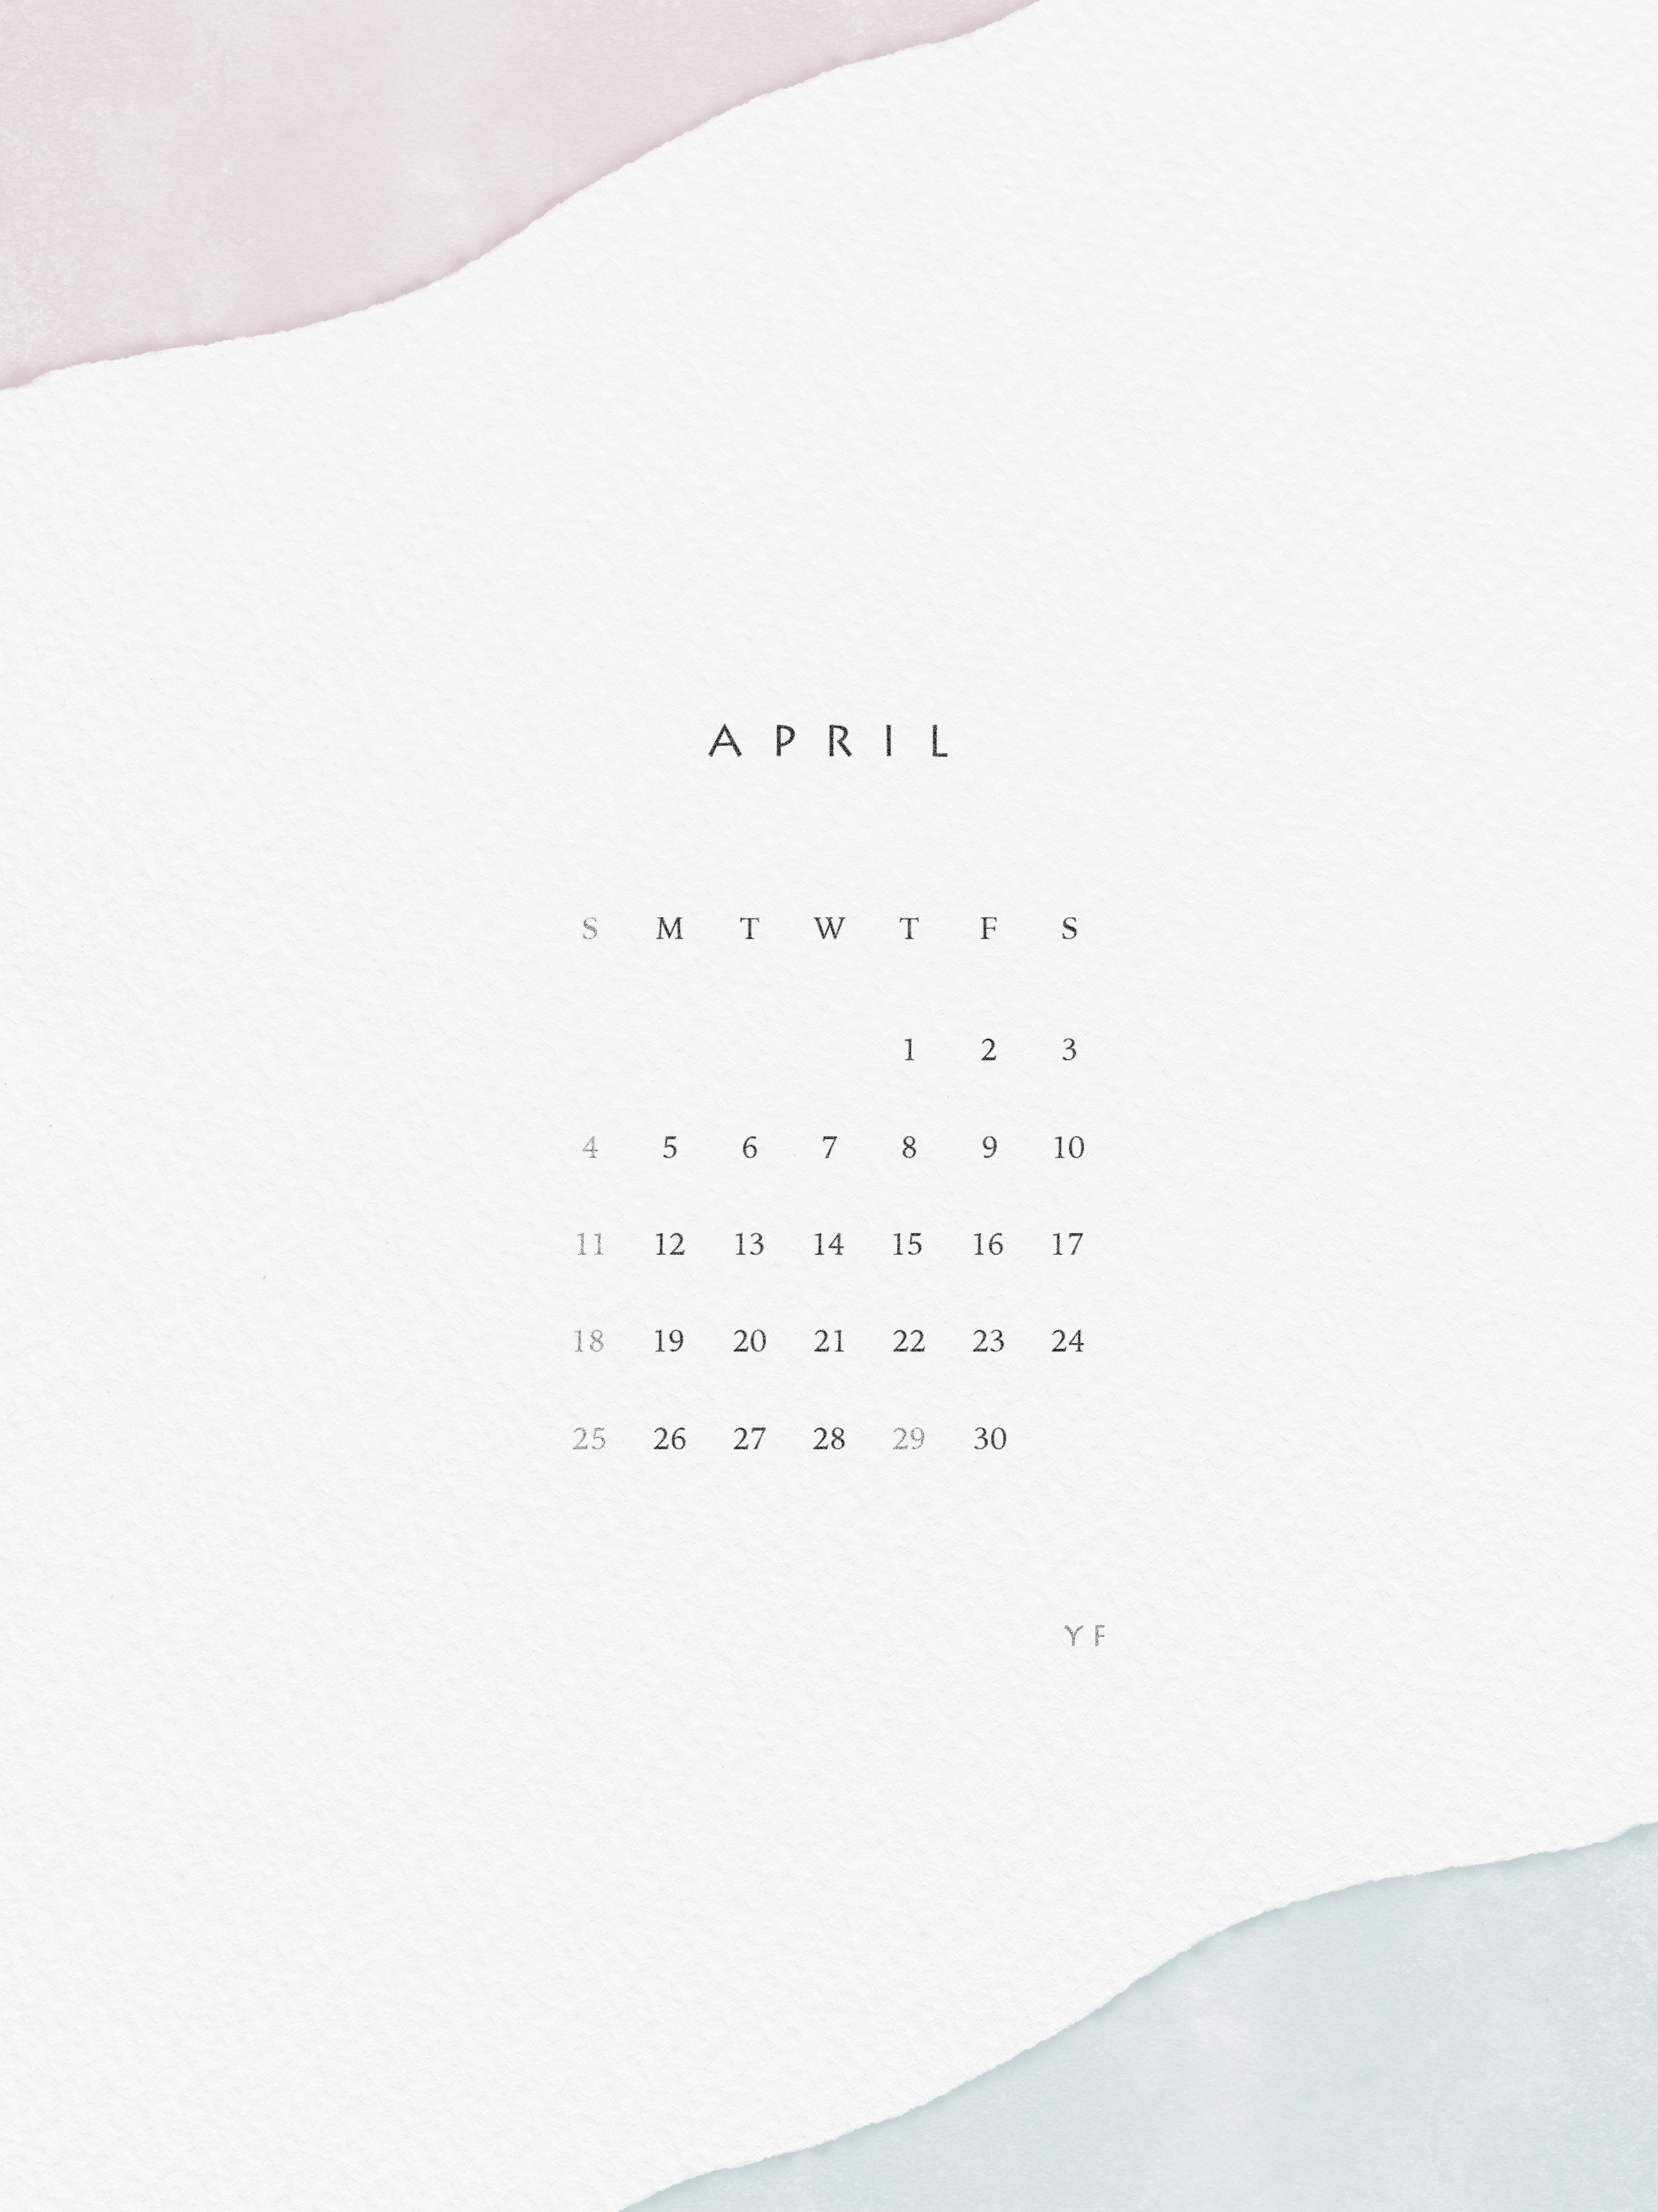 April 21 Calendar Wallpaper For The Ipad Design By Yf